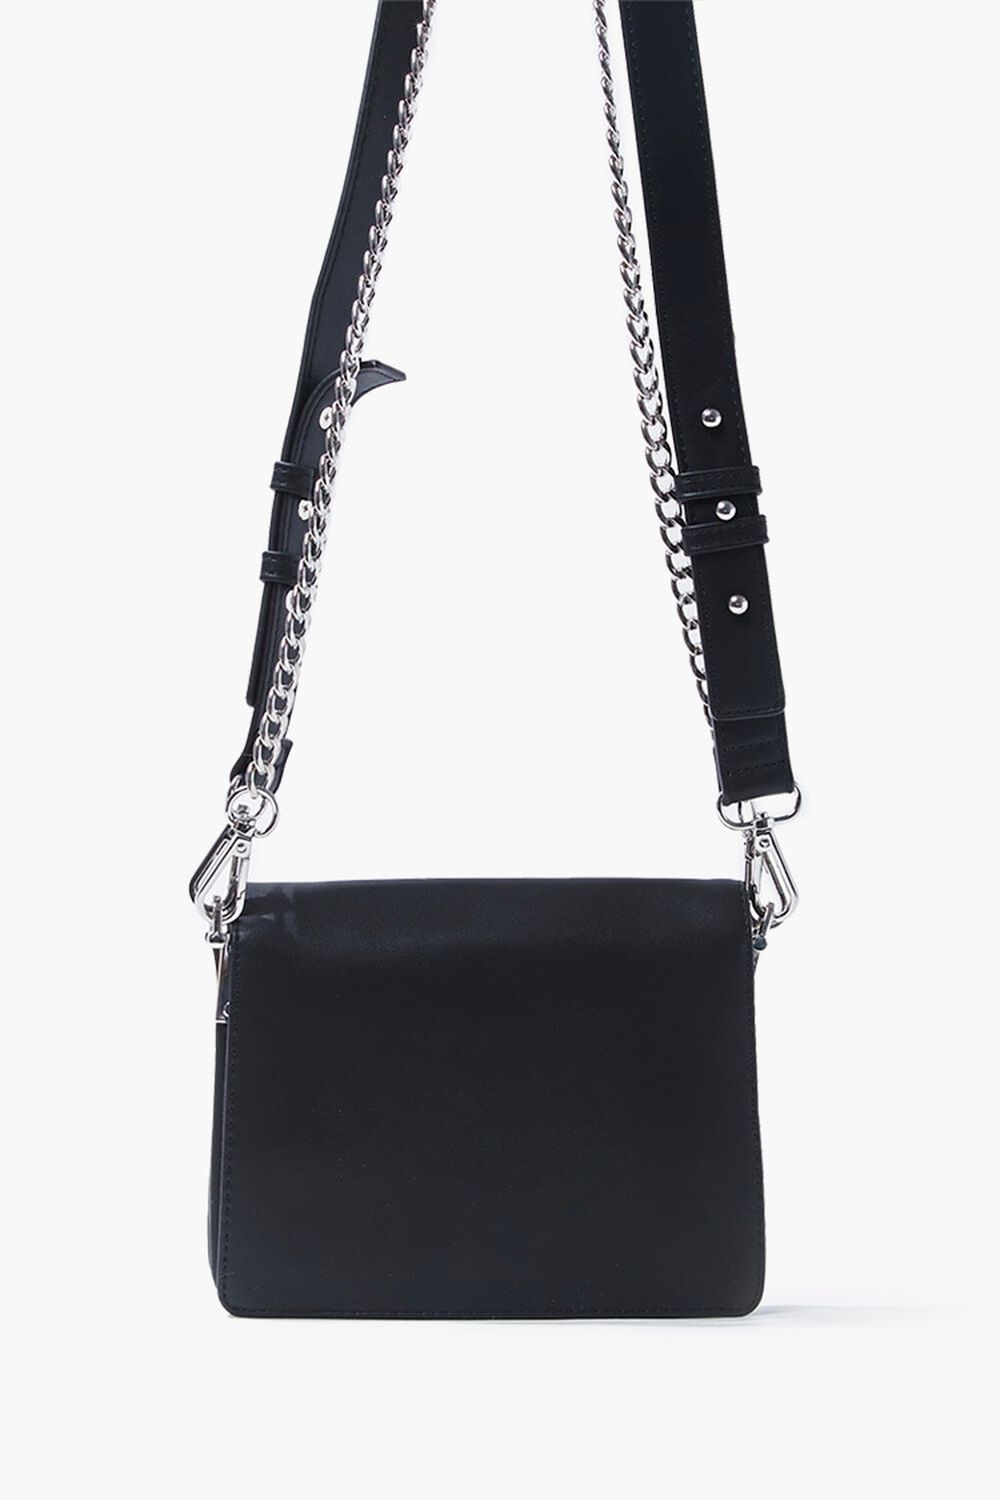 BLACK Curb Chain Crossbody Bag, image 1